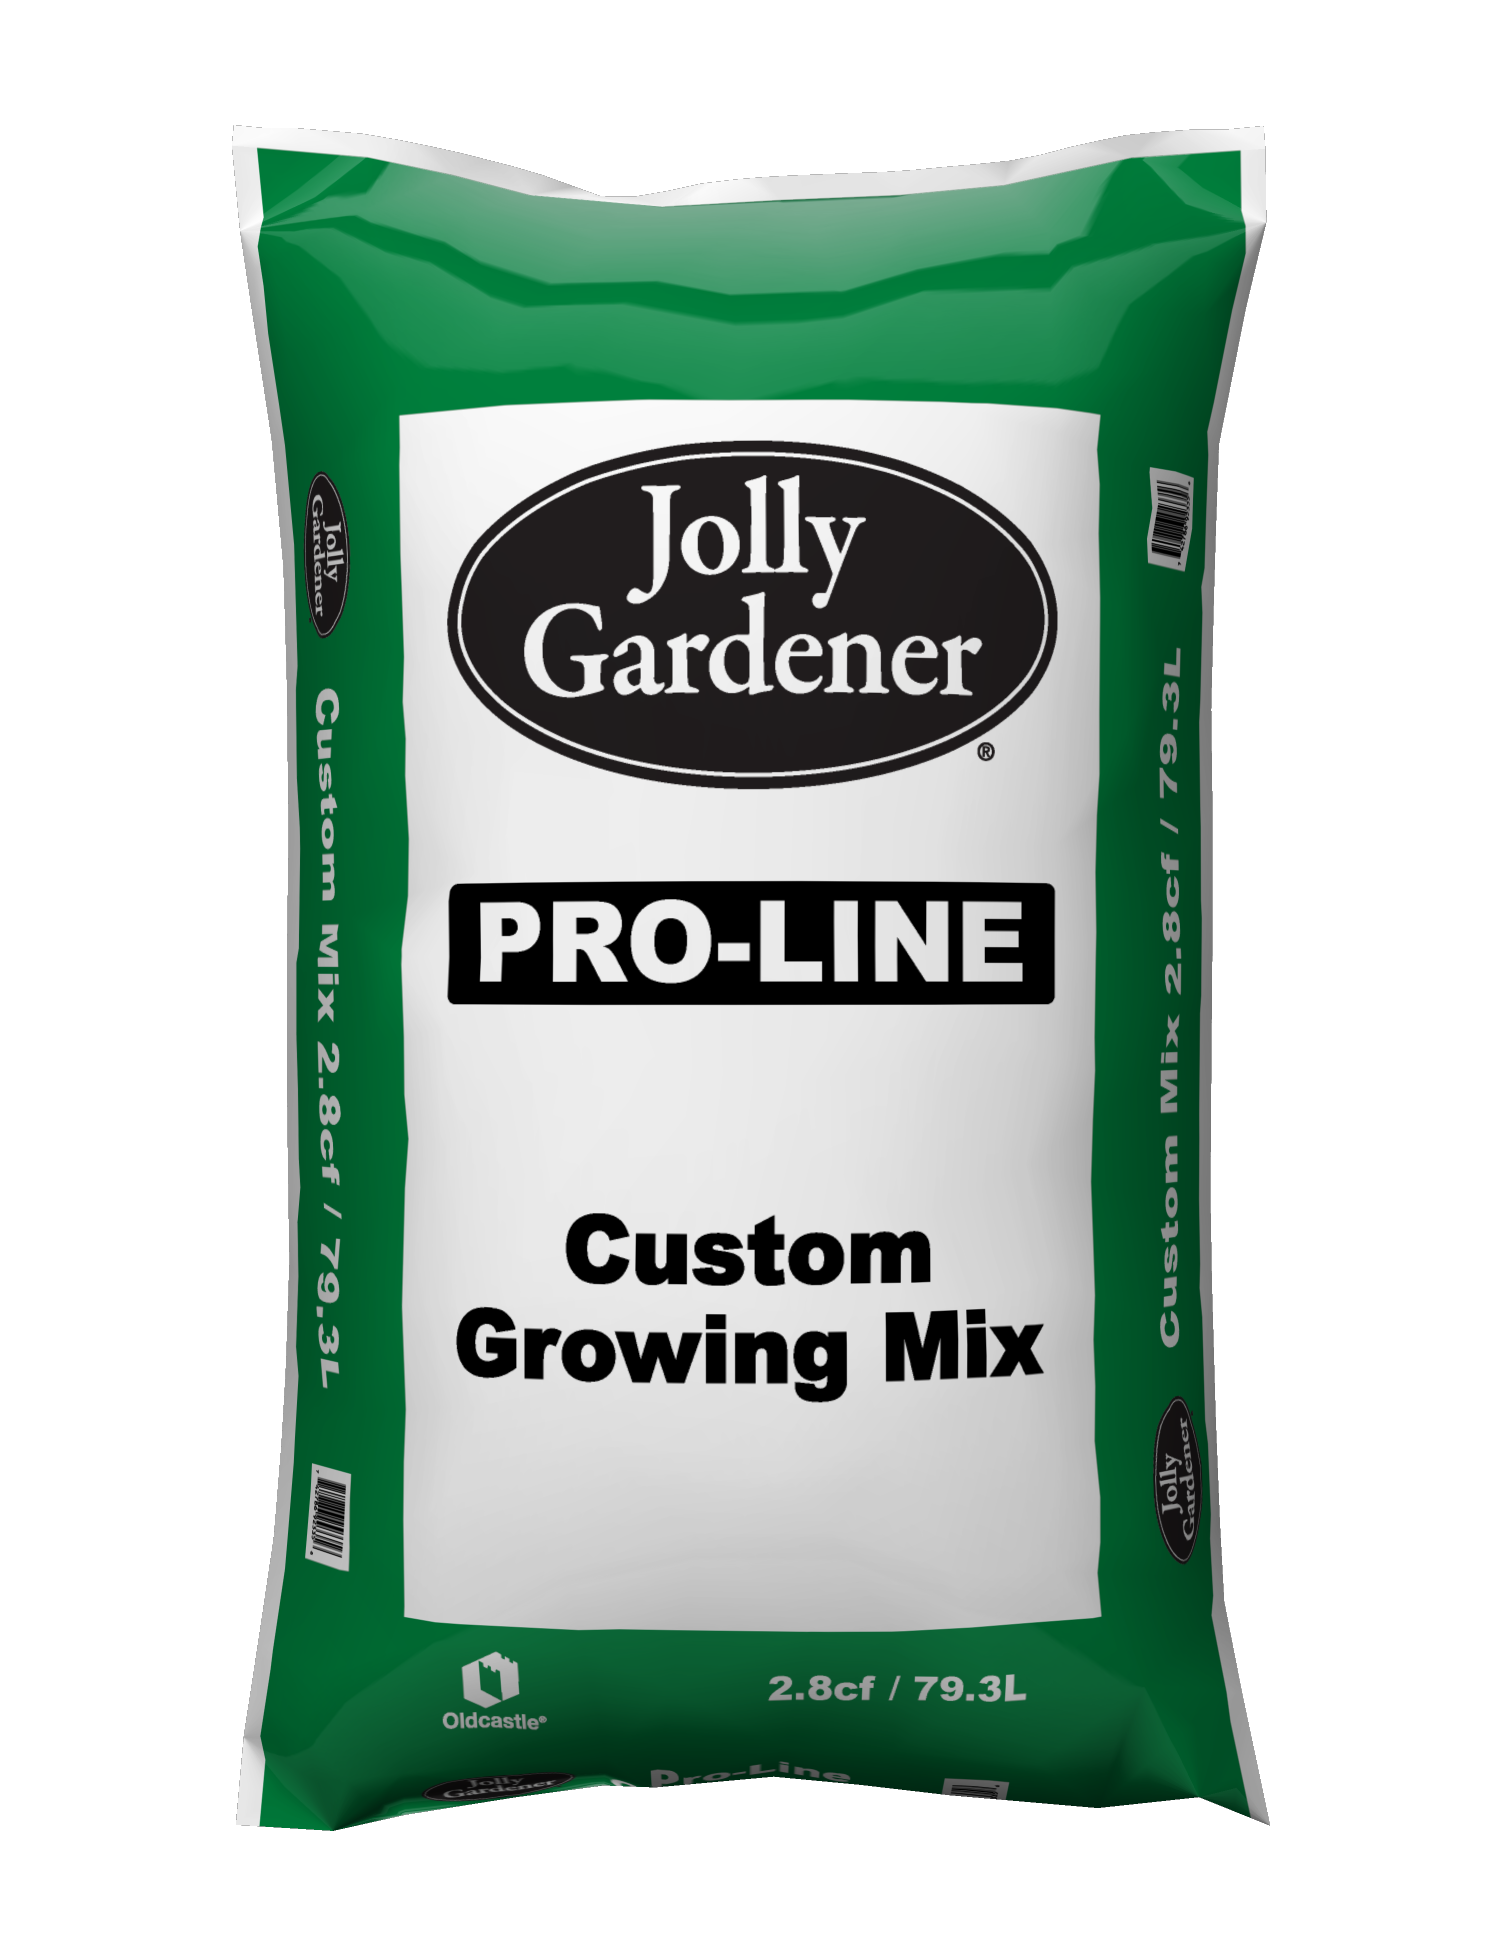 Jolly Gardener PRO-LINE C/G 2.8 cu. ft. Bag